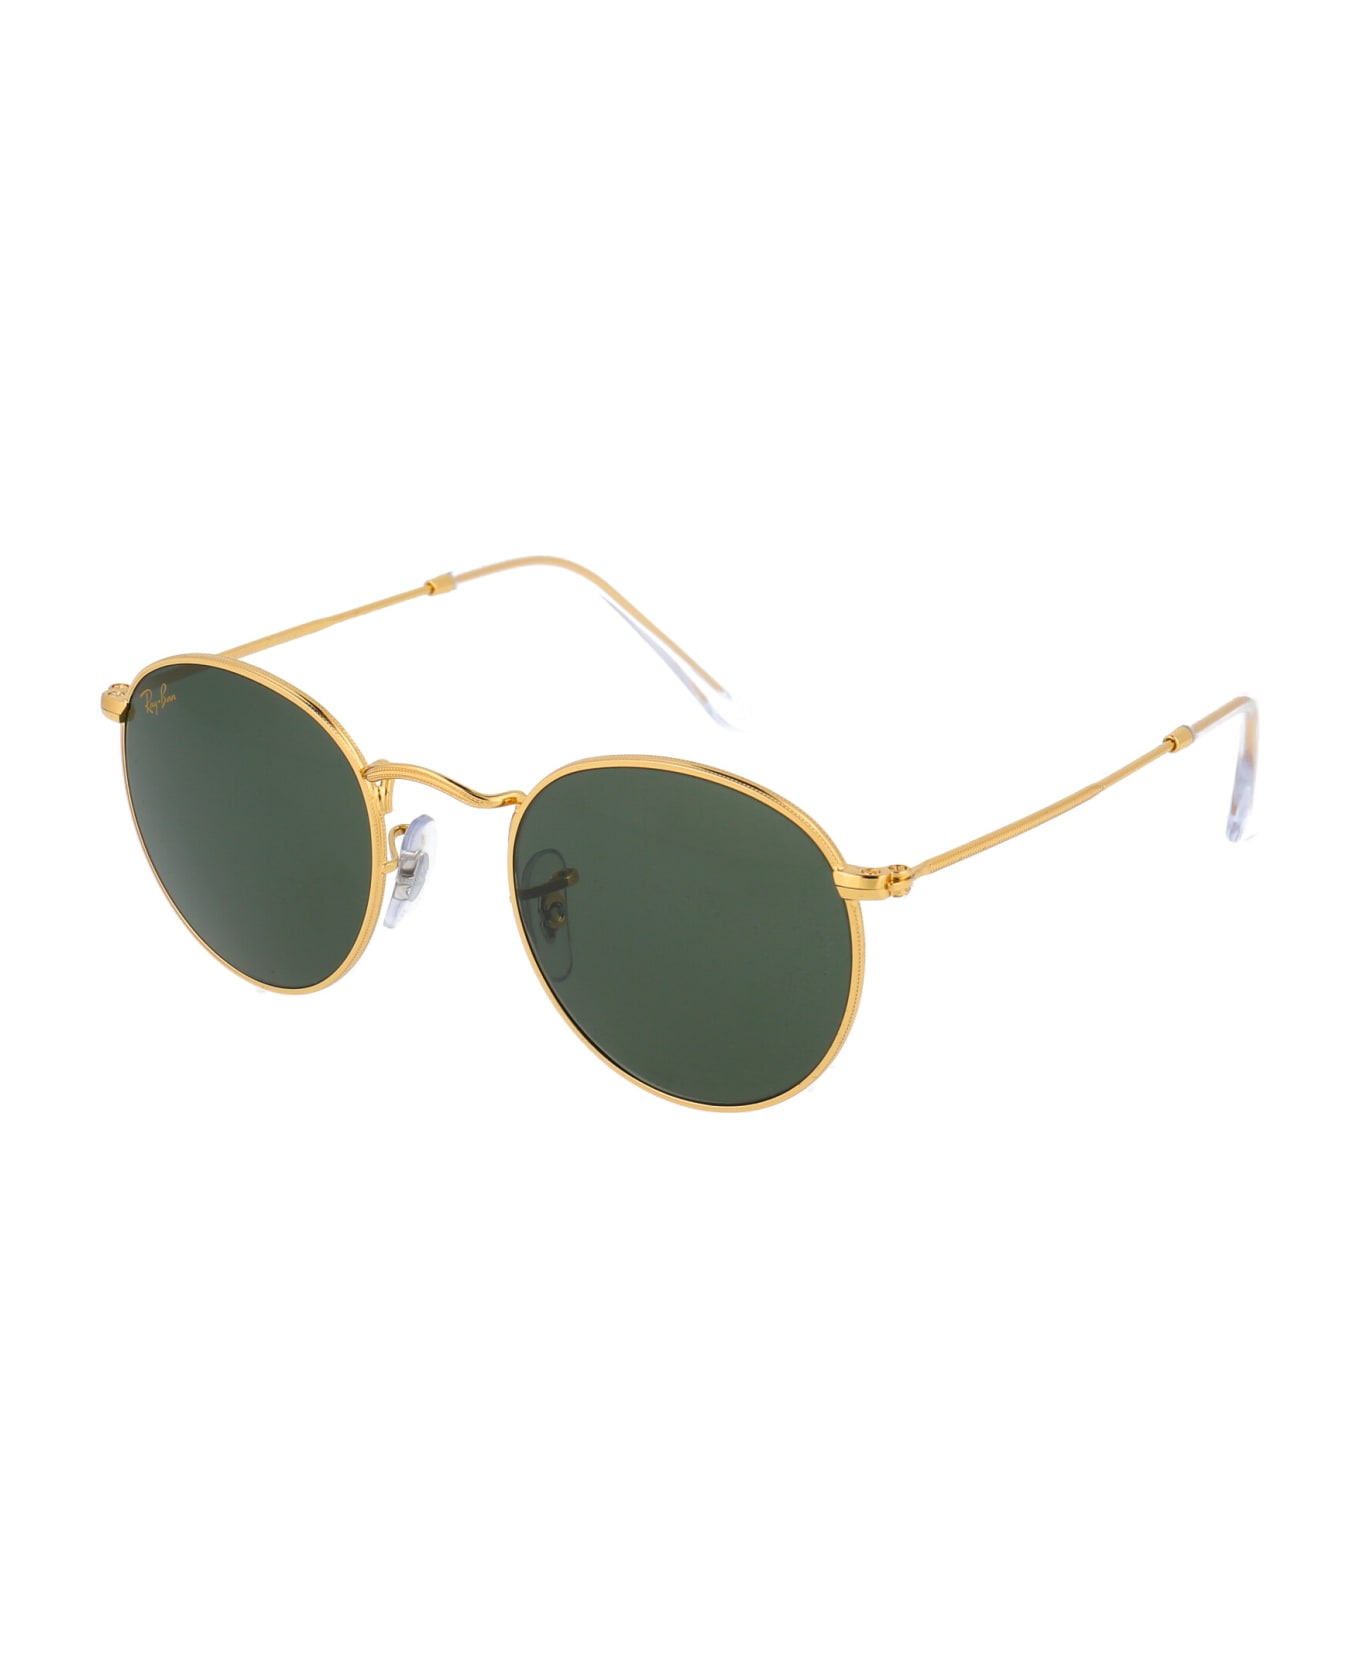 Ray-Ban Round Metal Sunglasses - 919631 GOLD